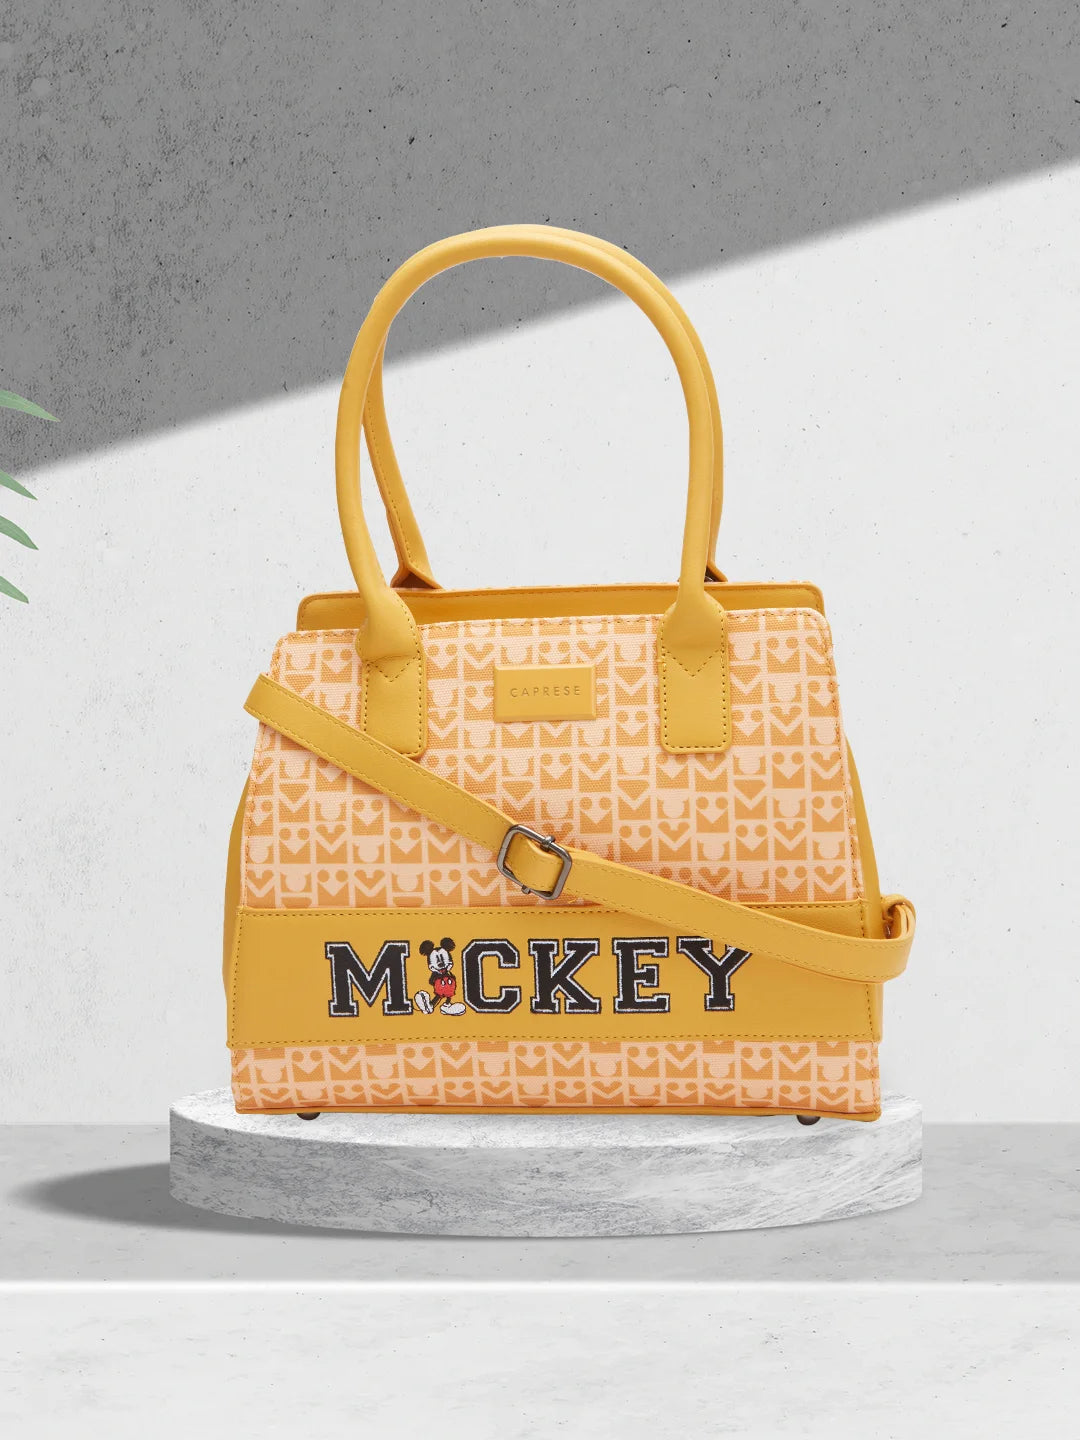 Caprese Disney Inspired Graphic Printed Mickey Mouse Collection Satchel Medium Handbag